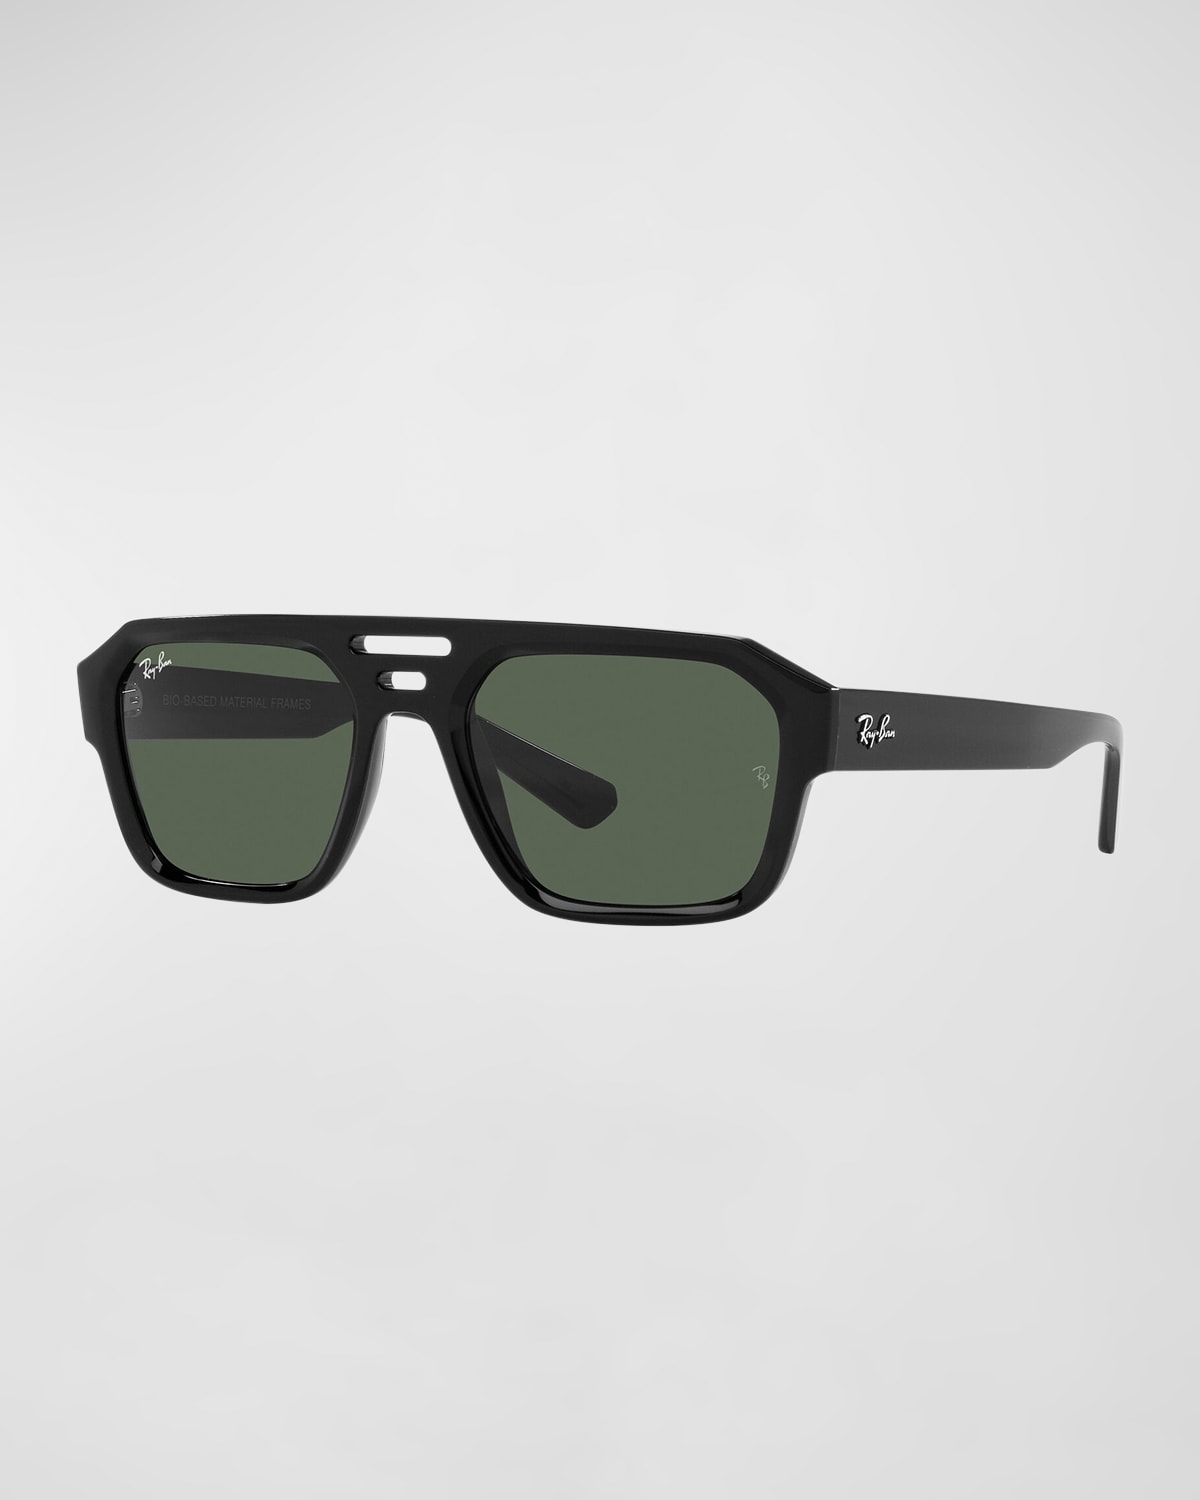 Ray Ban Corrigan Sunglasses In Black/green Solid